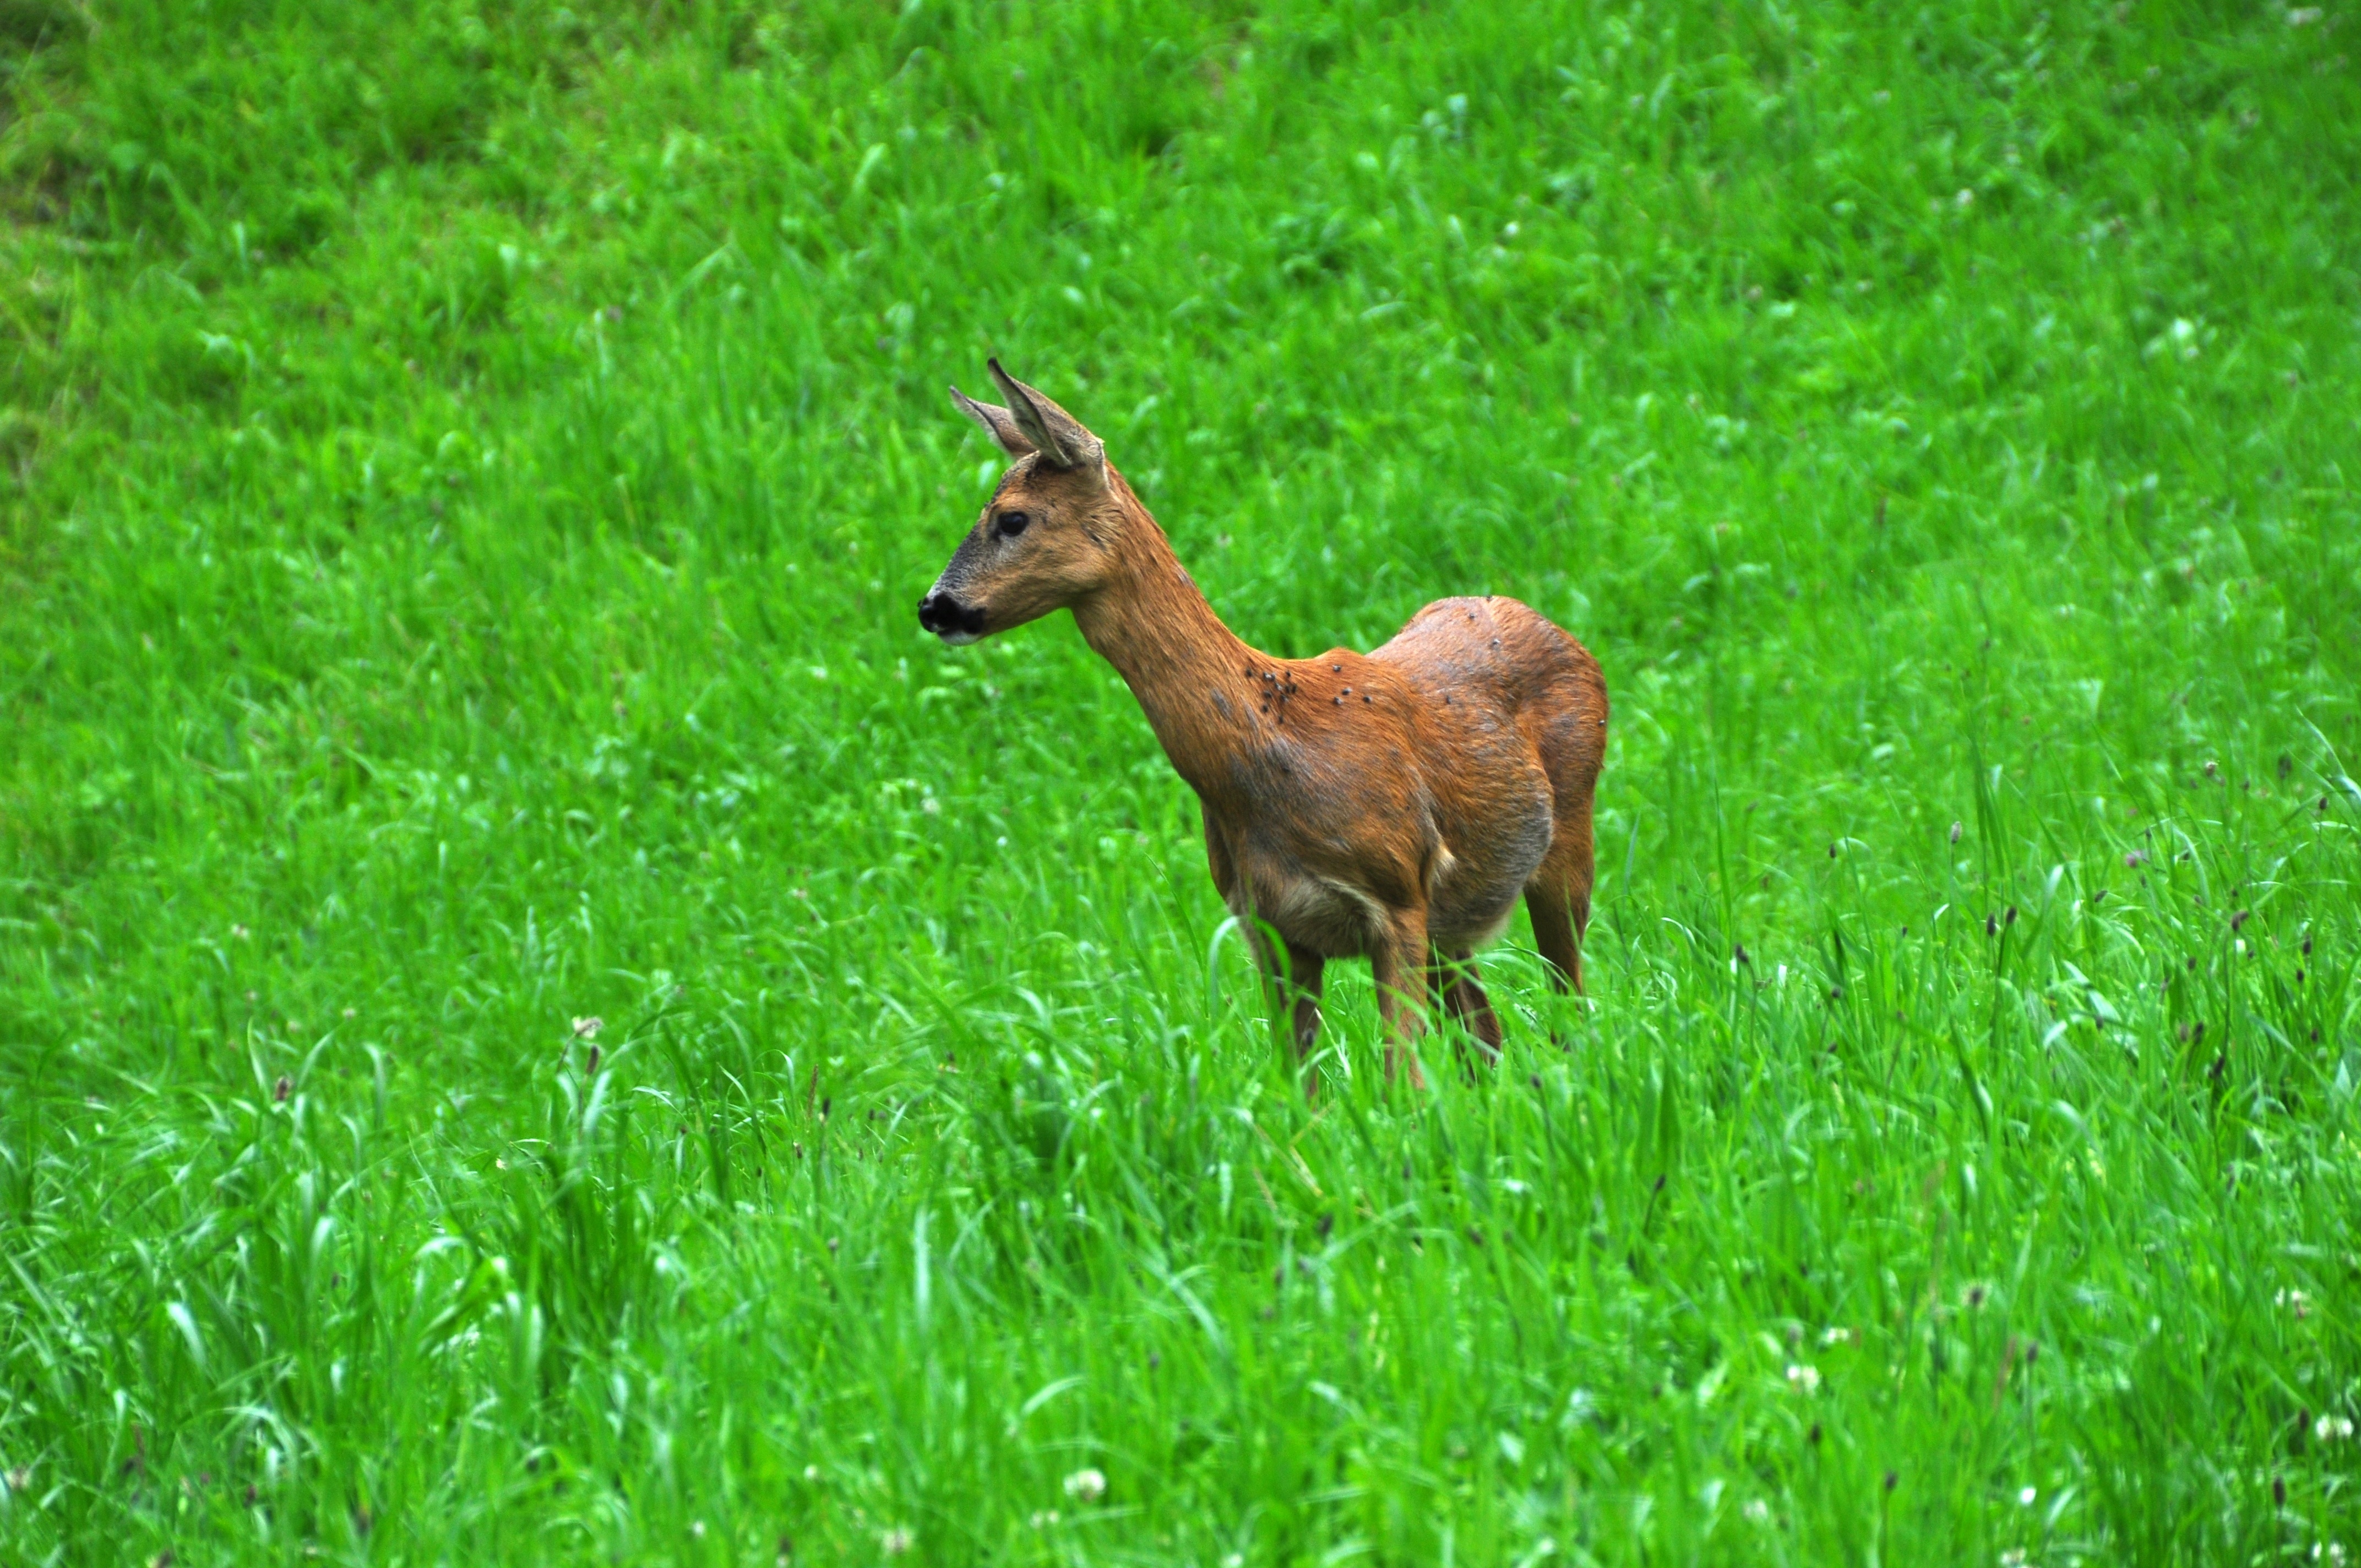 brown deer standing on green grass field during daytime